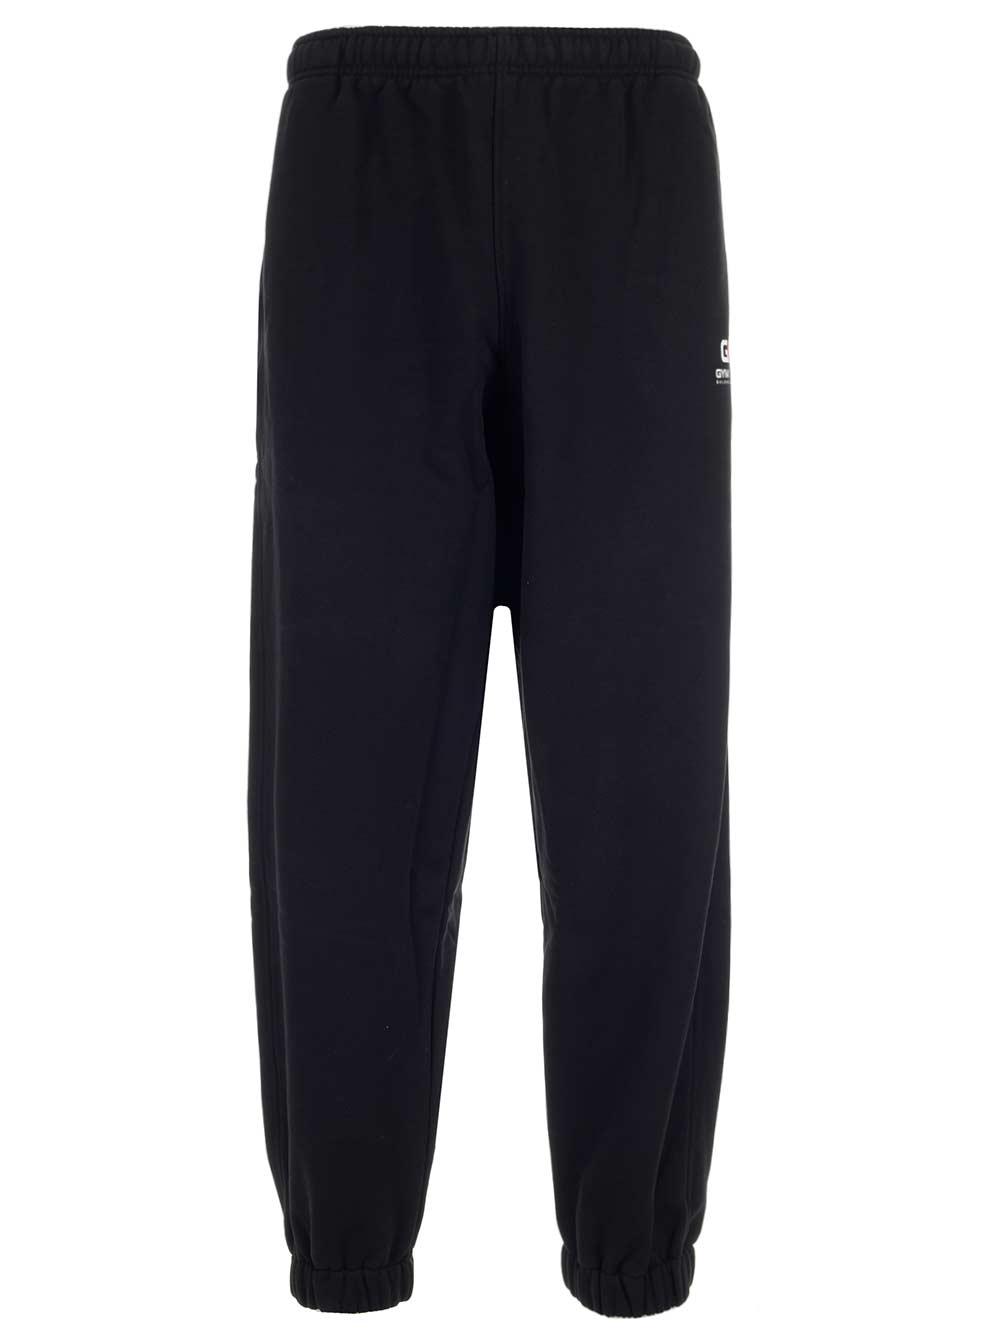 Balenciaga Cotton Gym Wear Jogger Pants in Black for Men - Lyst